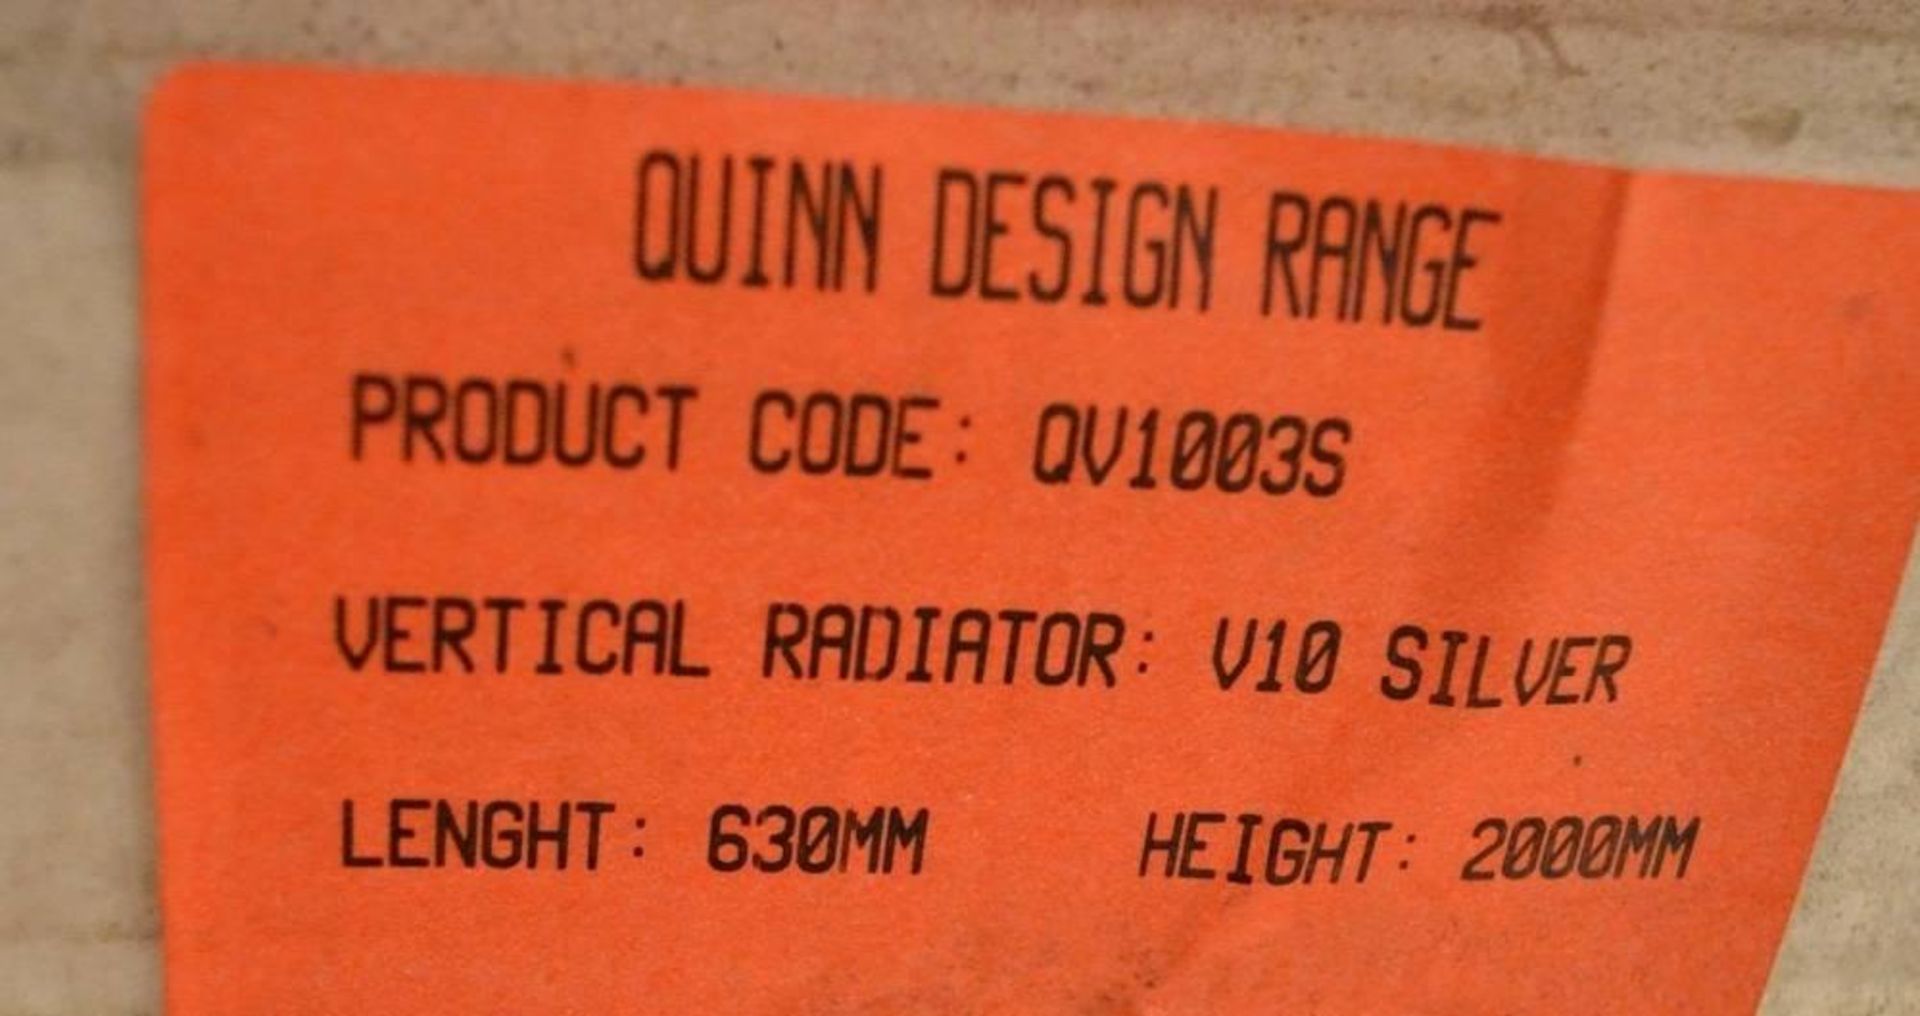 1 x Quinn Slieve Designer Single Panel Vertical Radiator in Matt Silver - Contemporary Design - Will - Image 2 of 5